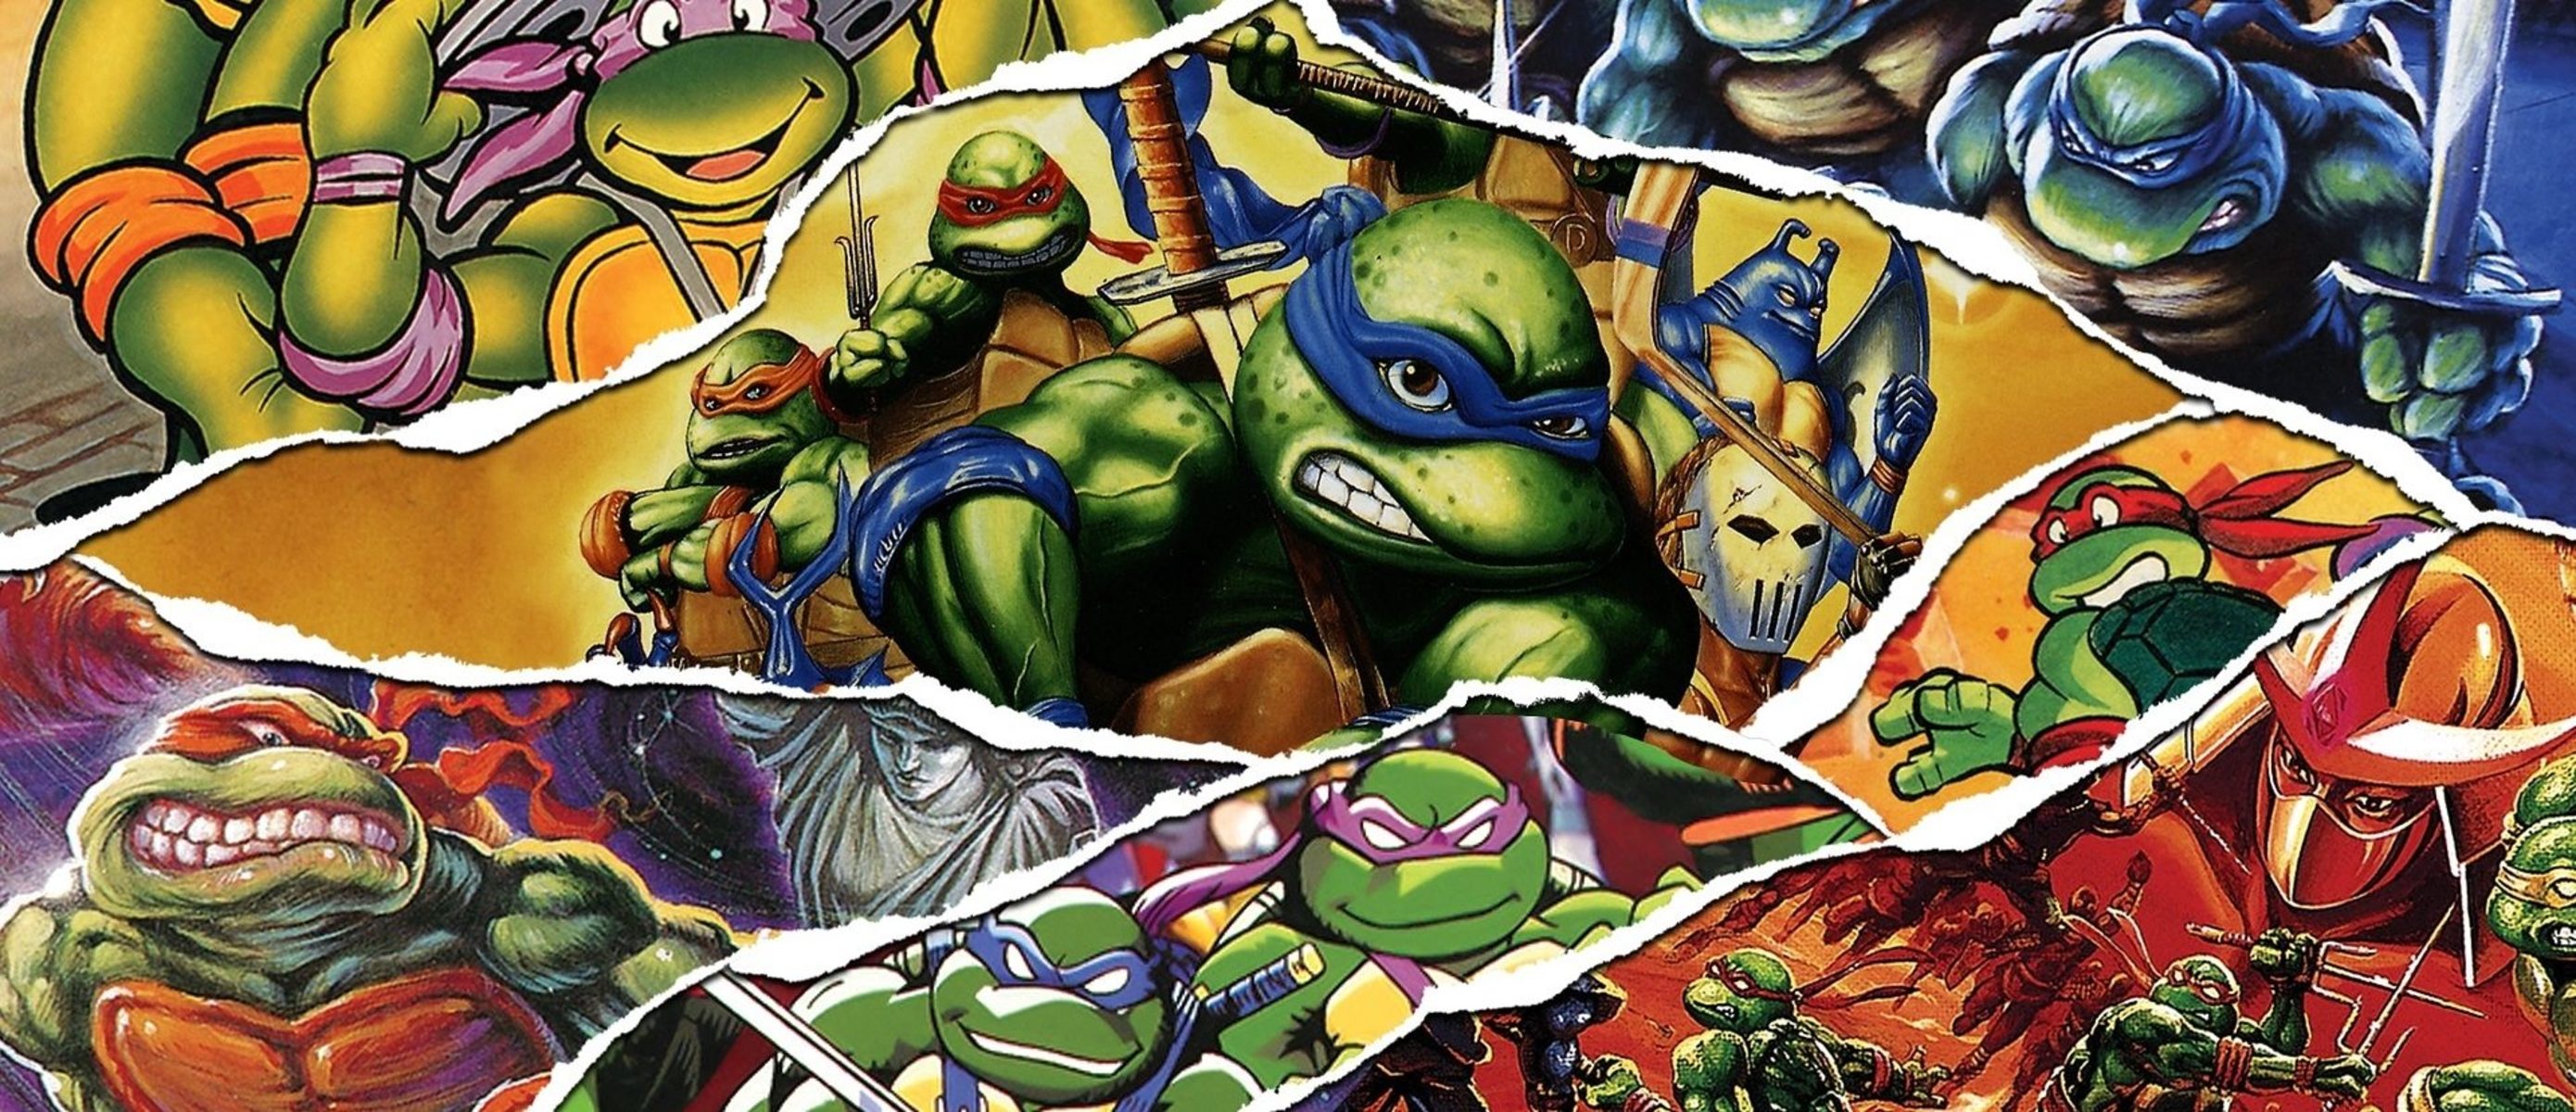 Turtles cowabunga. TMNT Cowabunga collection. Поклонники черепашек ниндзя. TMNT: the Cowabunga collection на Nintendo Switch. Teenage Mutant Ninja Turtles: the Cowabunga collection.